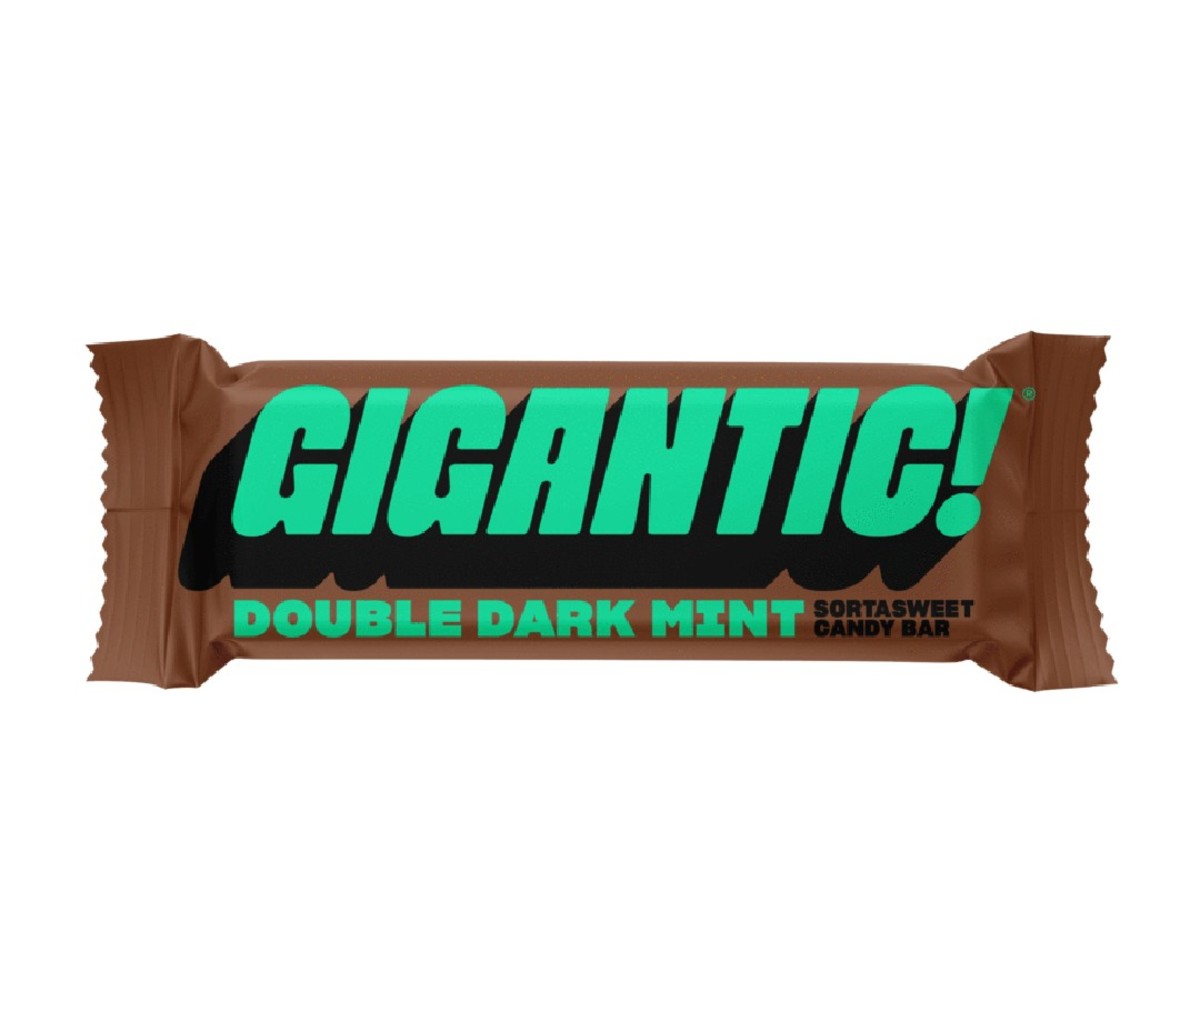 Gigantic vegan chocolate bar "Double Dark Mint" in limited edition